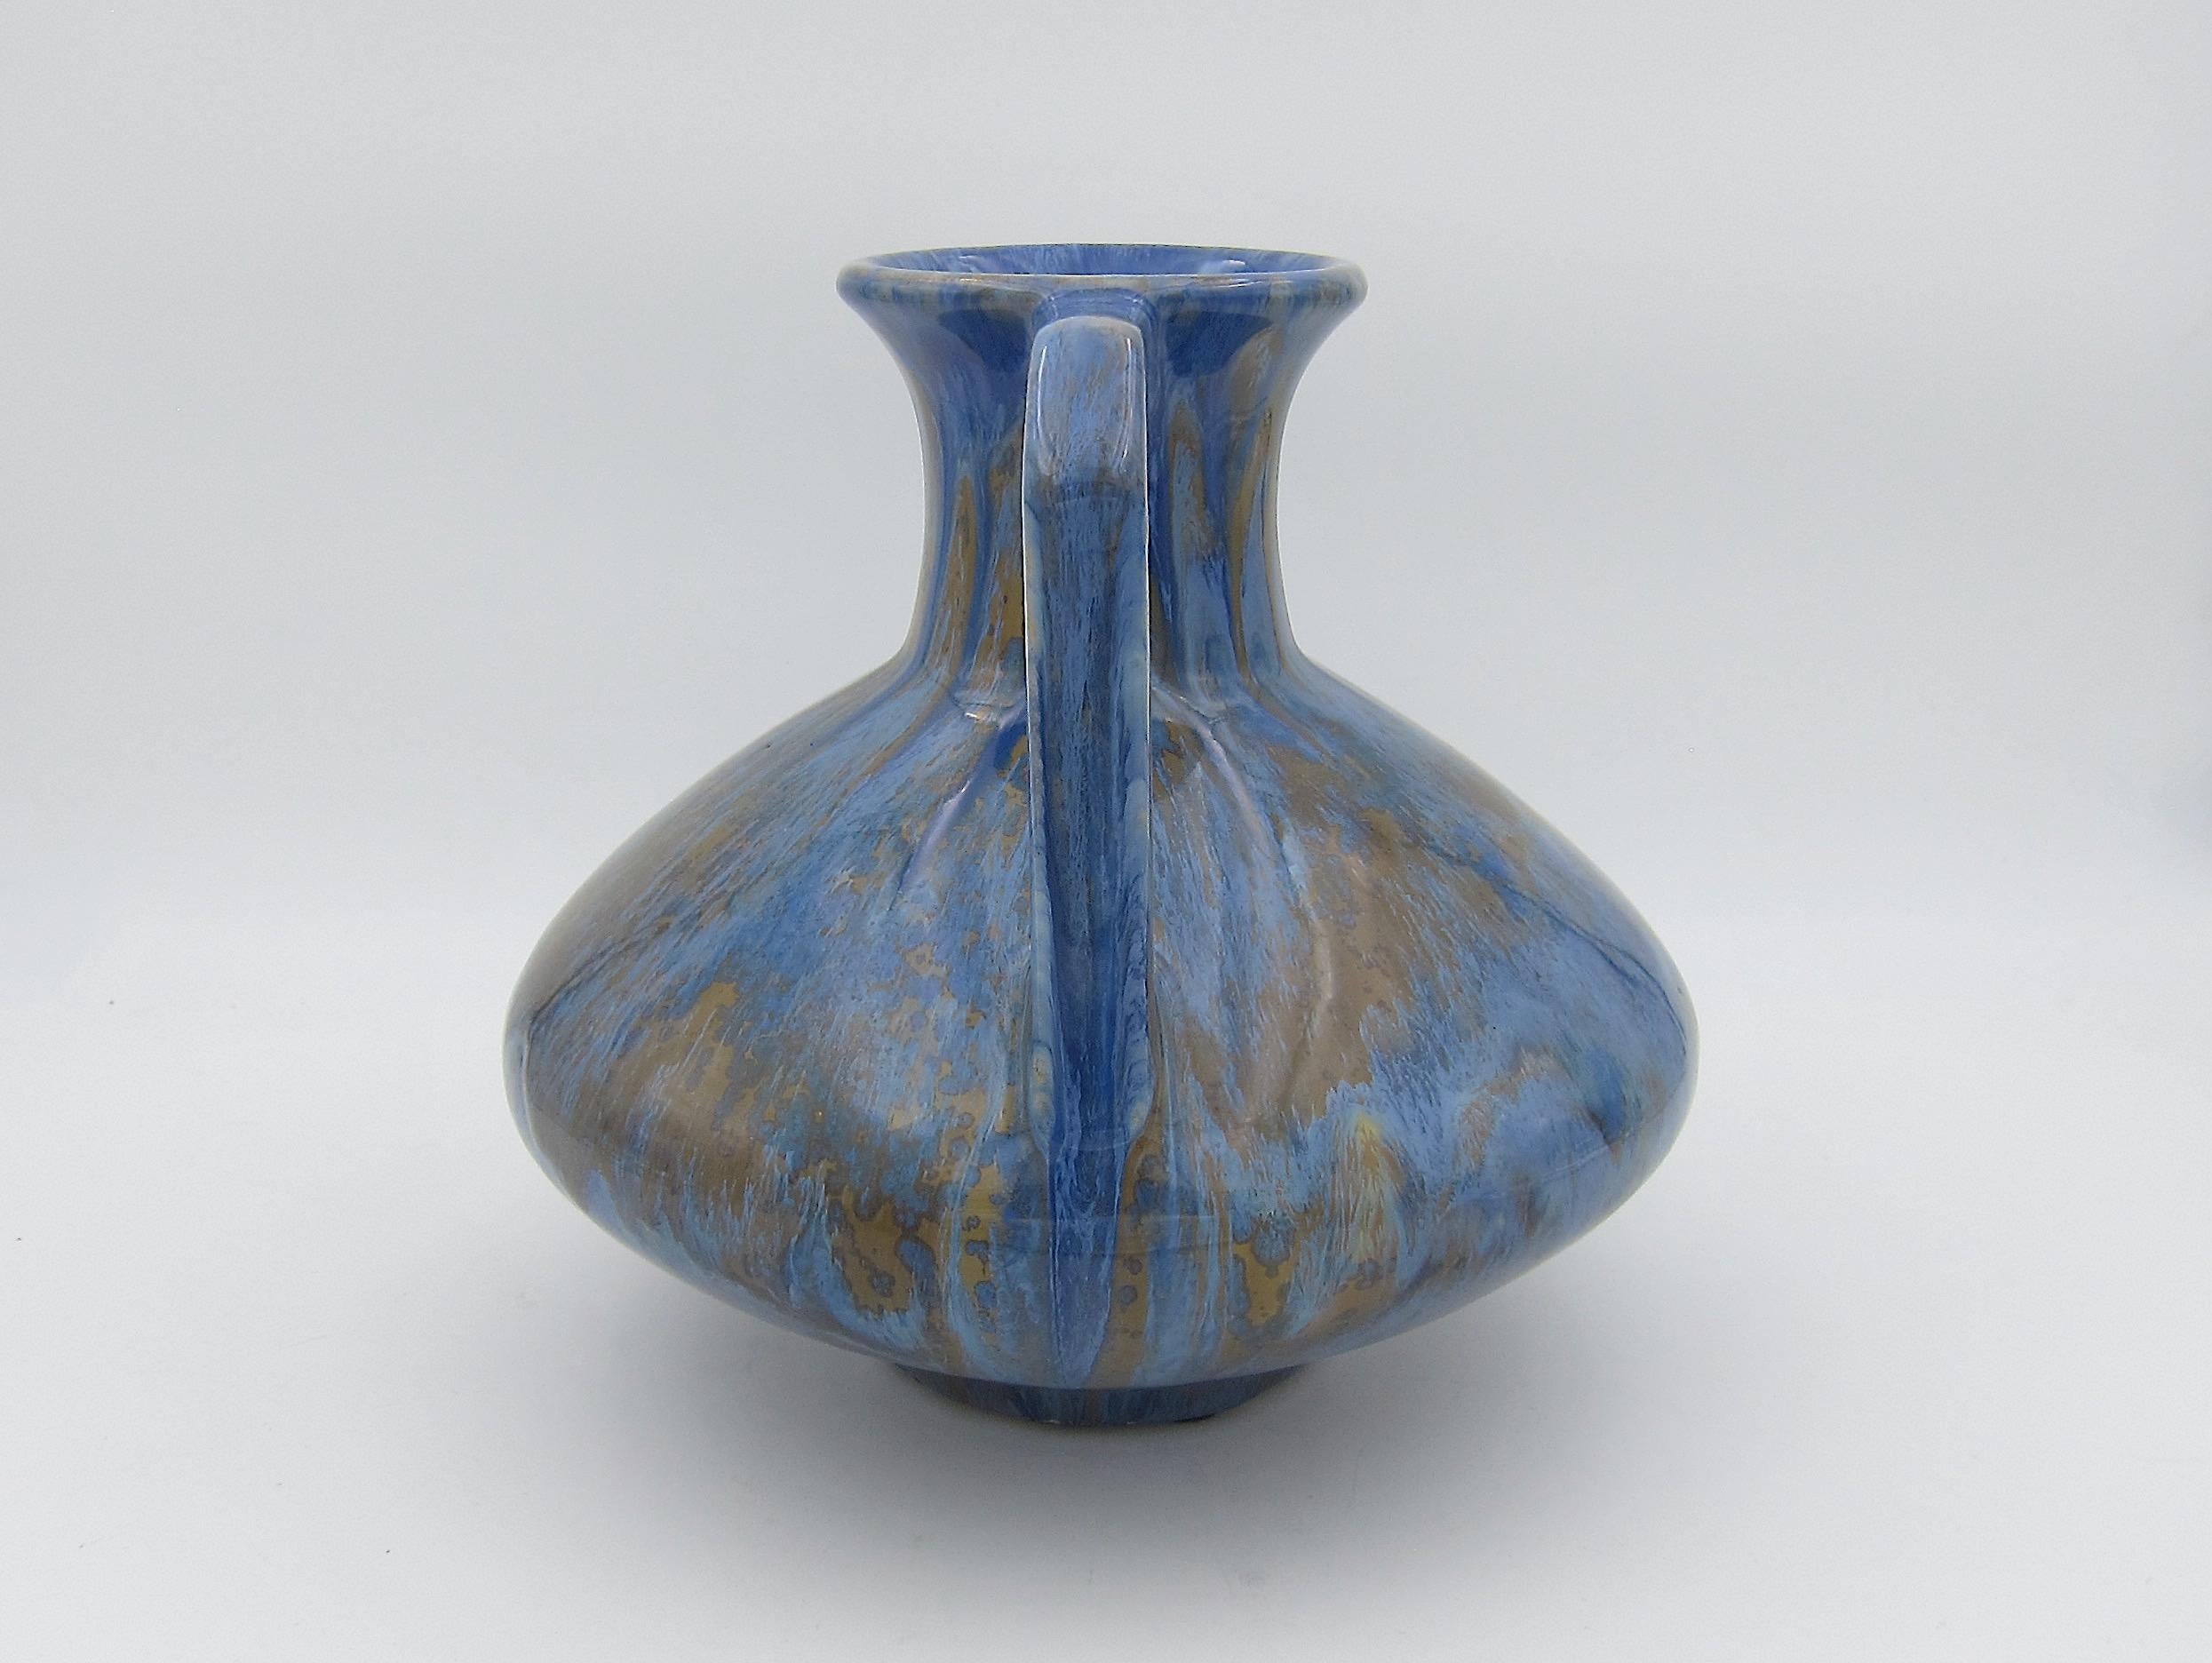 Glazed French Pierrefonds Vase with Blue Crystalline Glaze